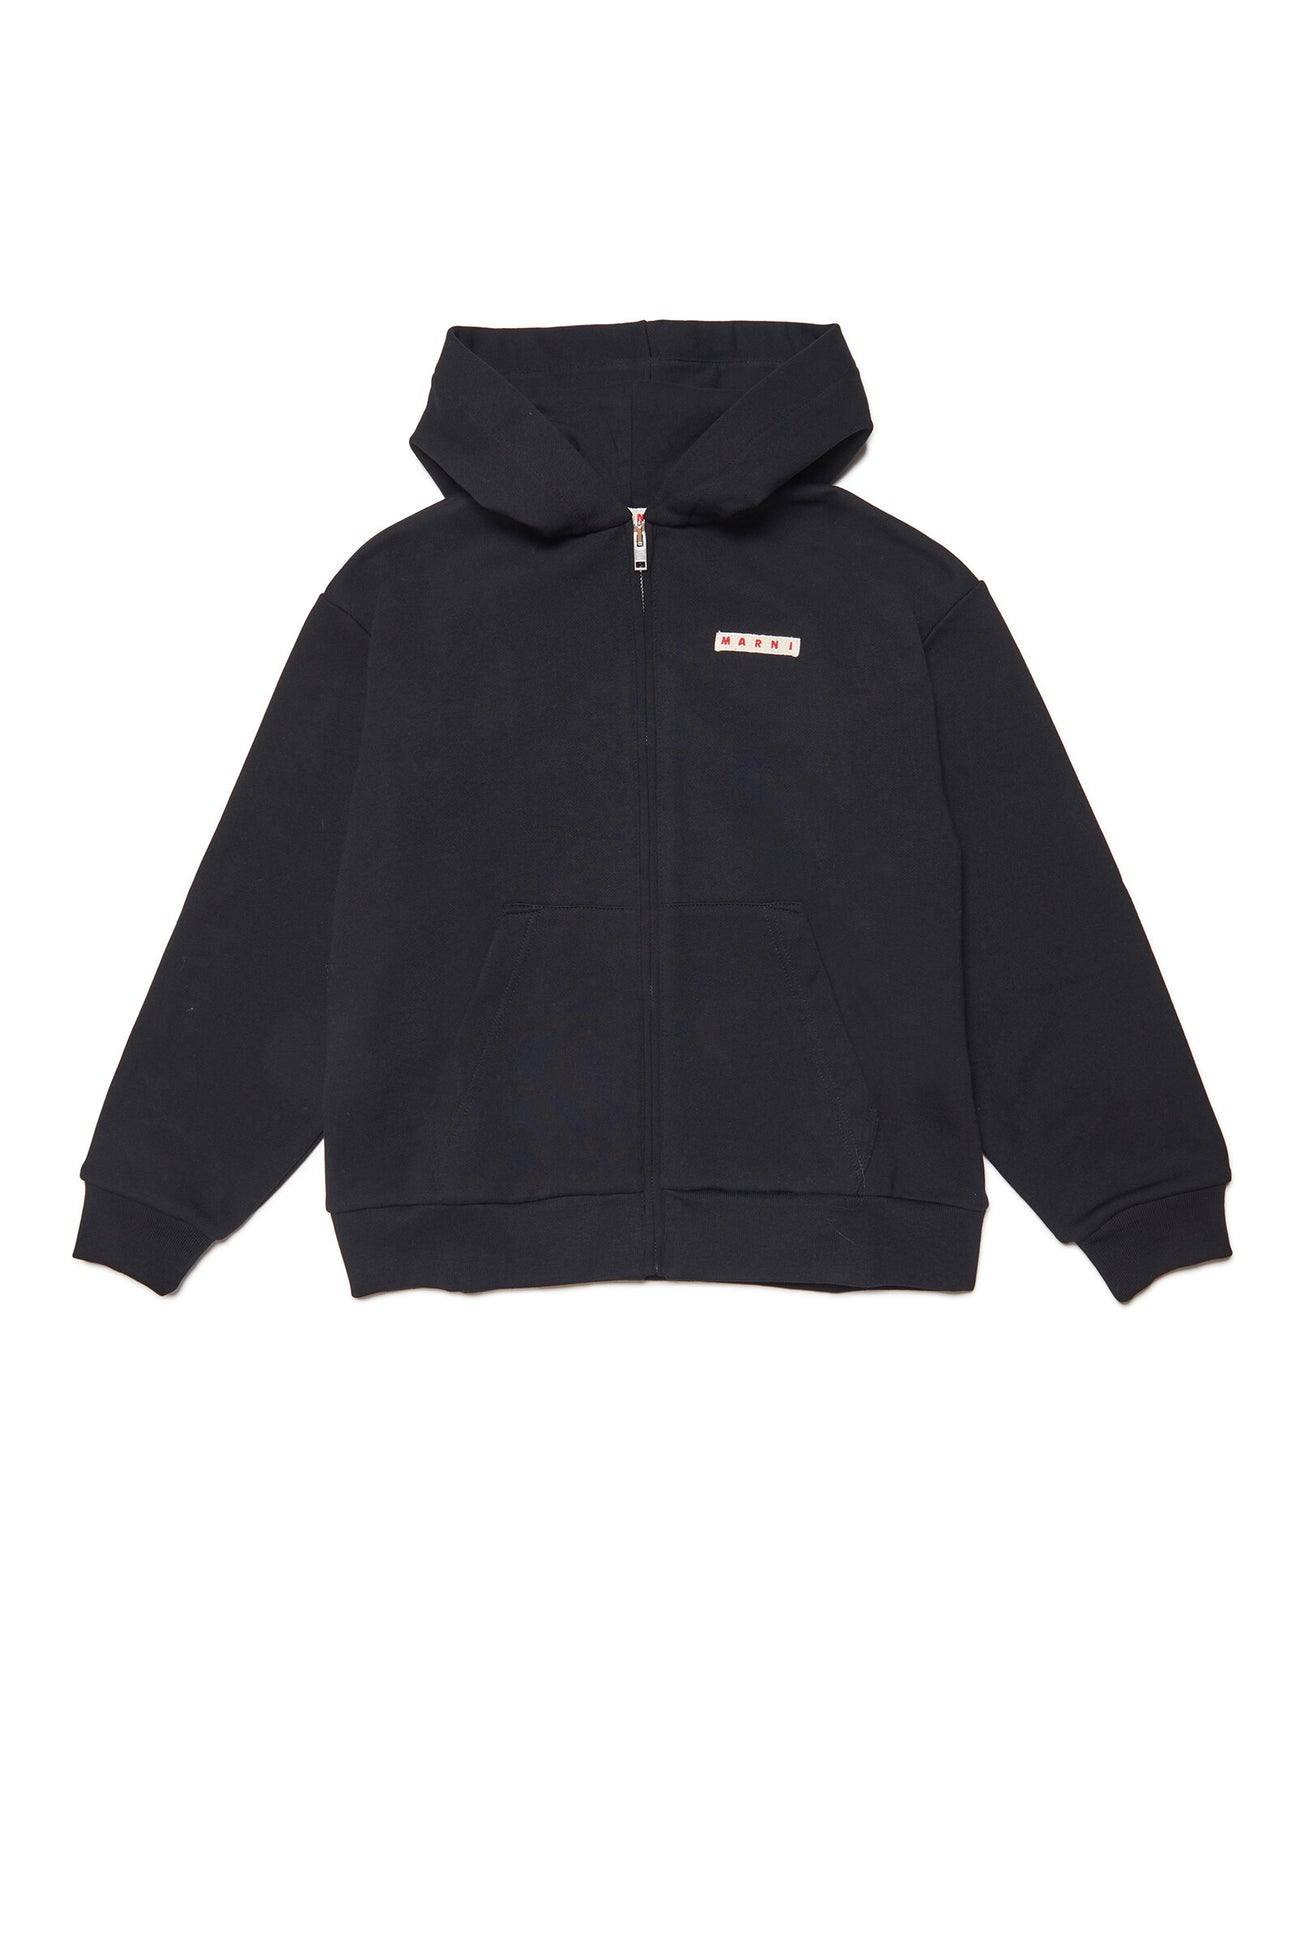 Cotton hooded sweatshirt with zip and logo 